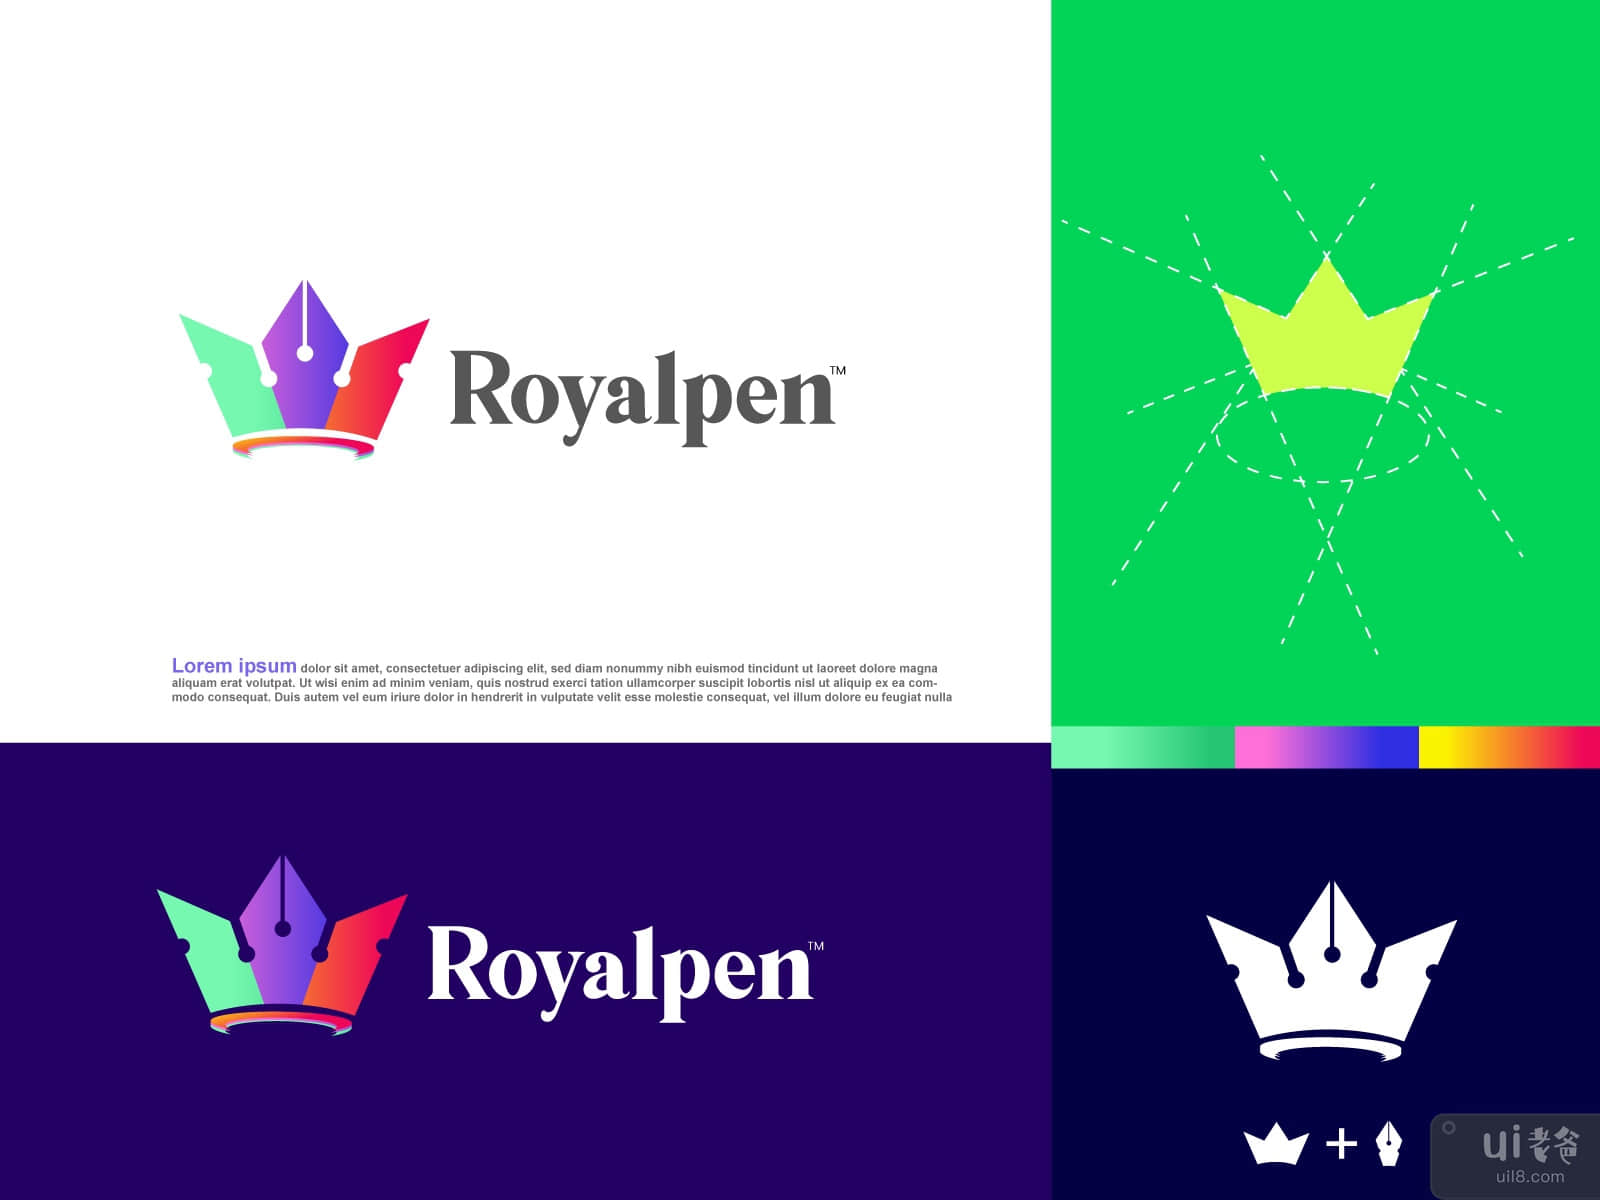 royalpen logo